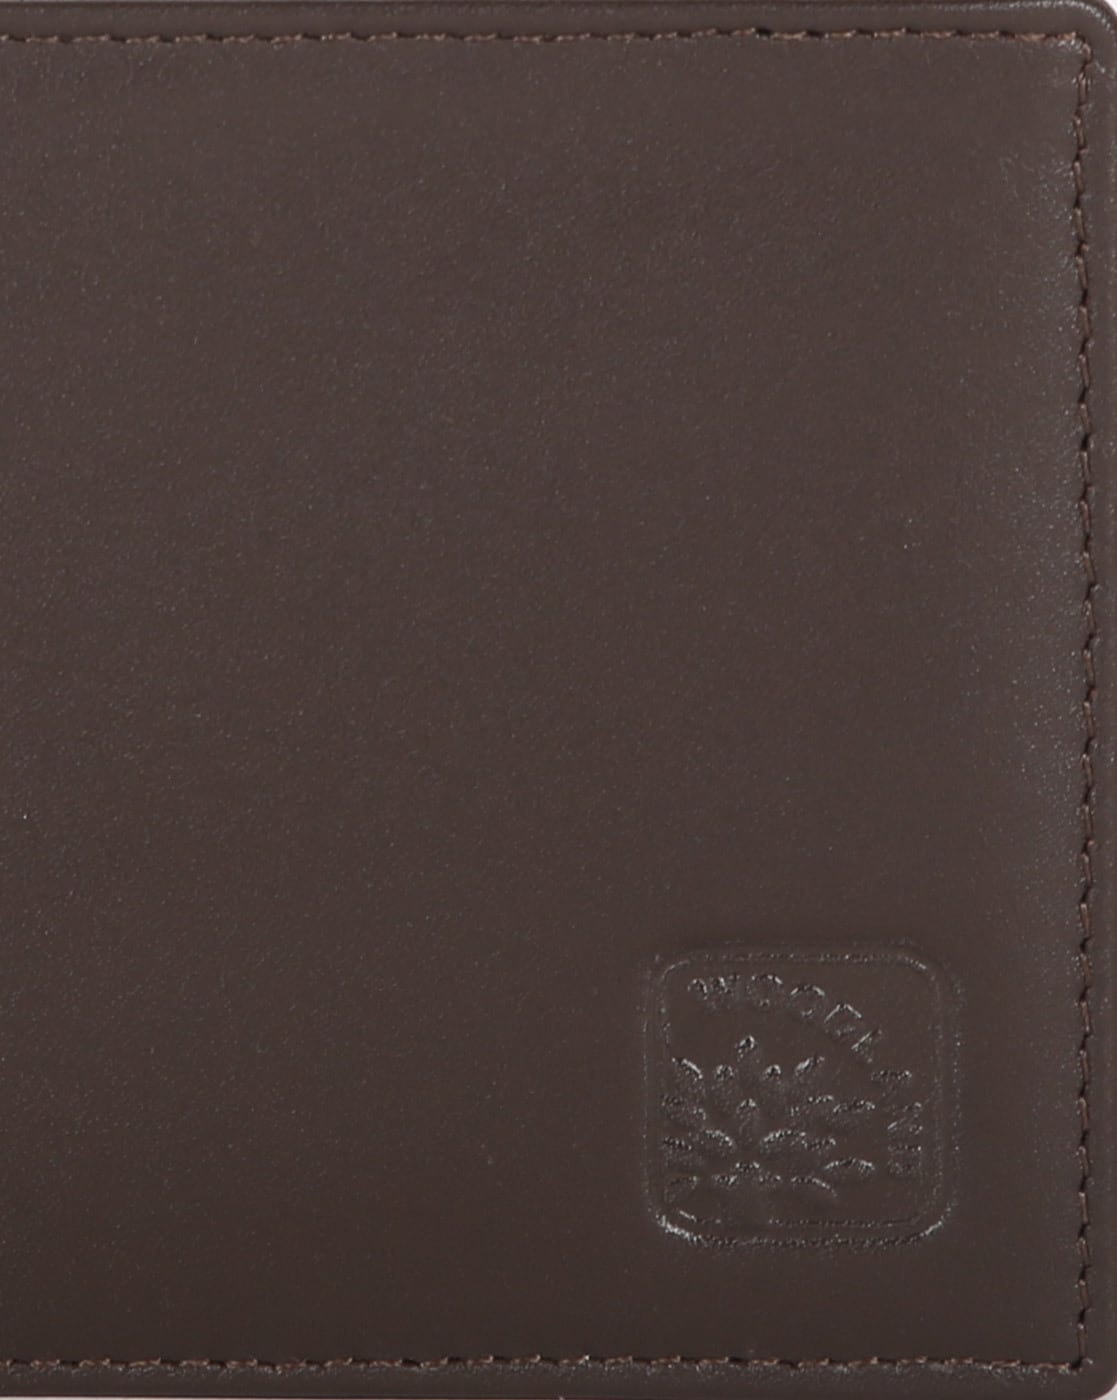 Leather wallet DAVID JONES Brown in Leather - 35312296